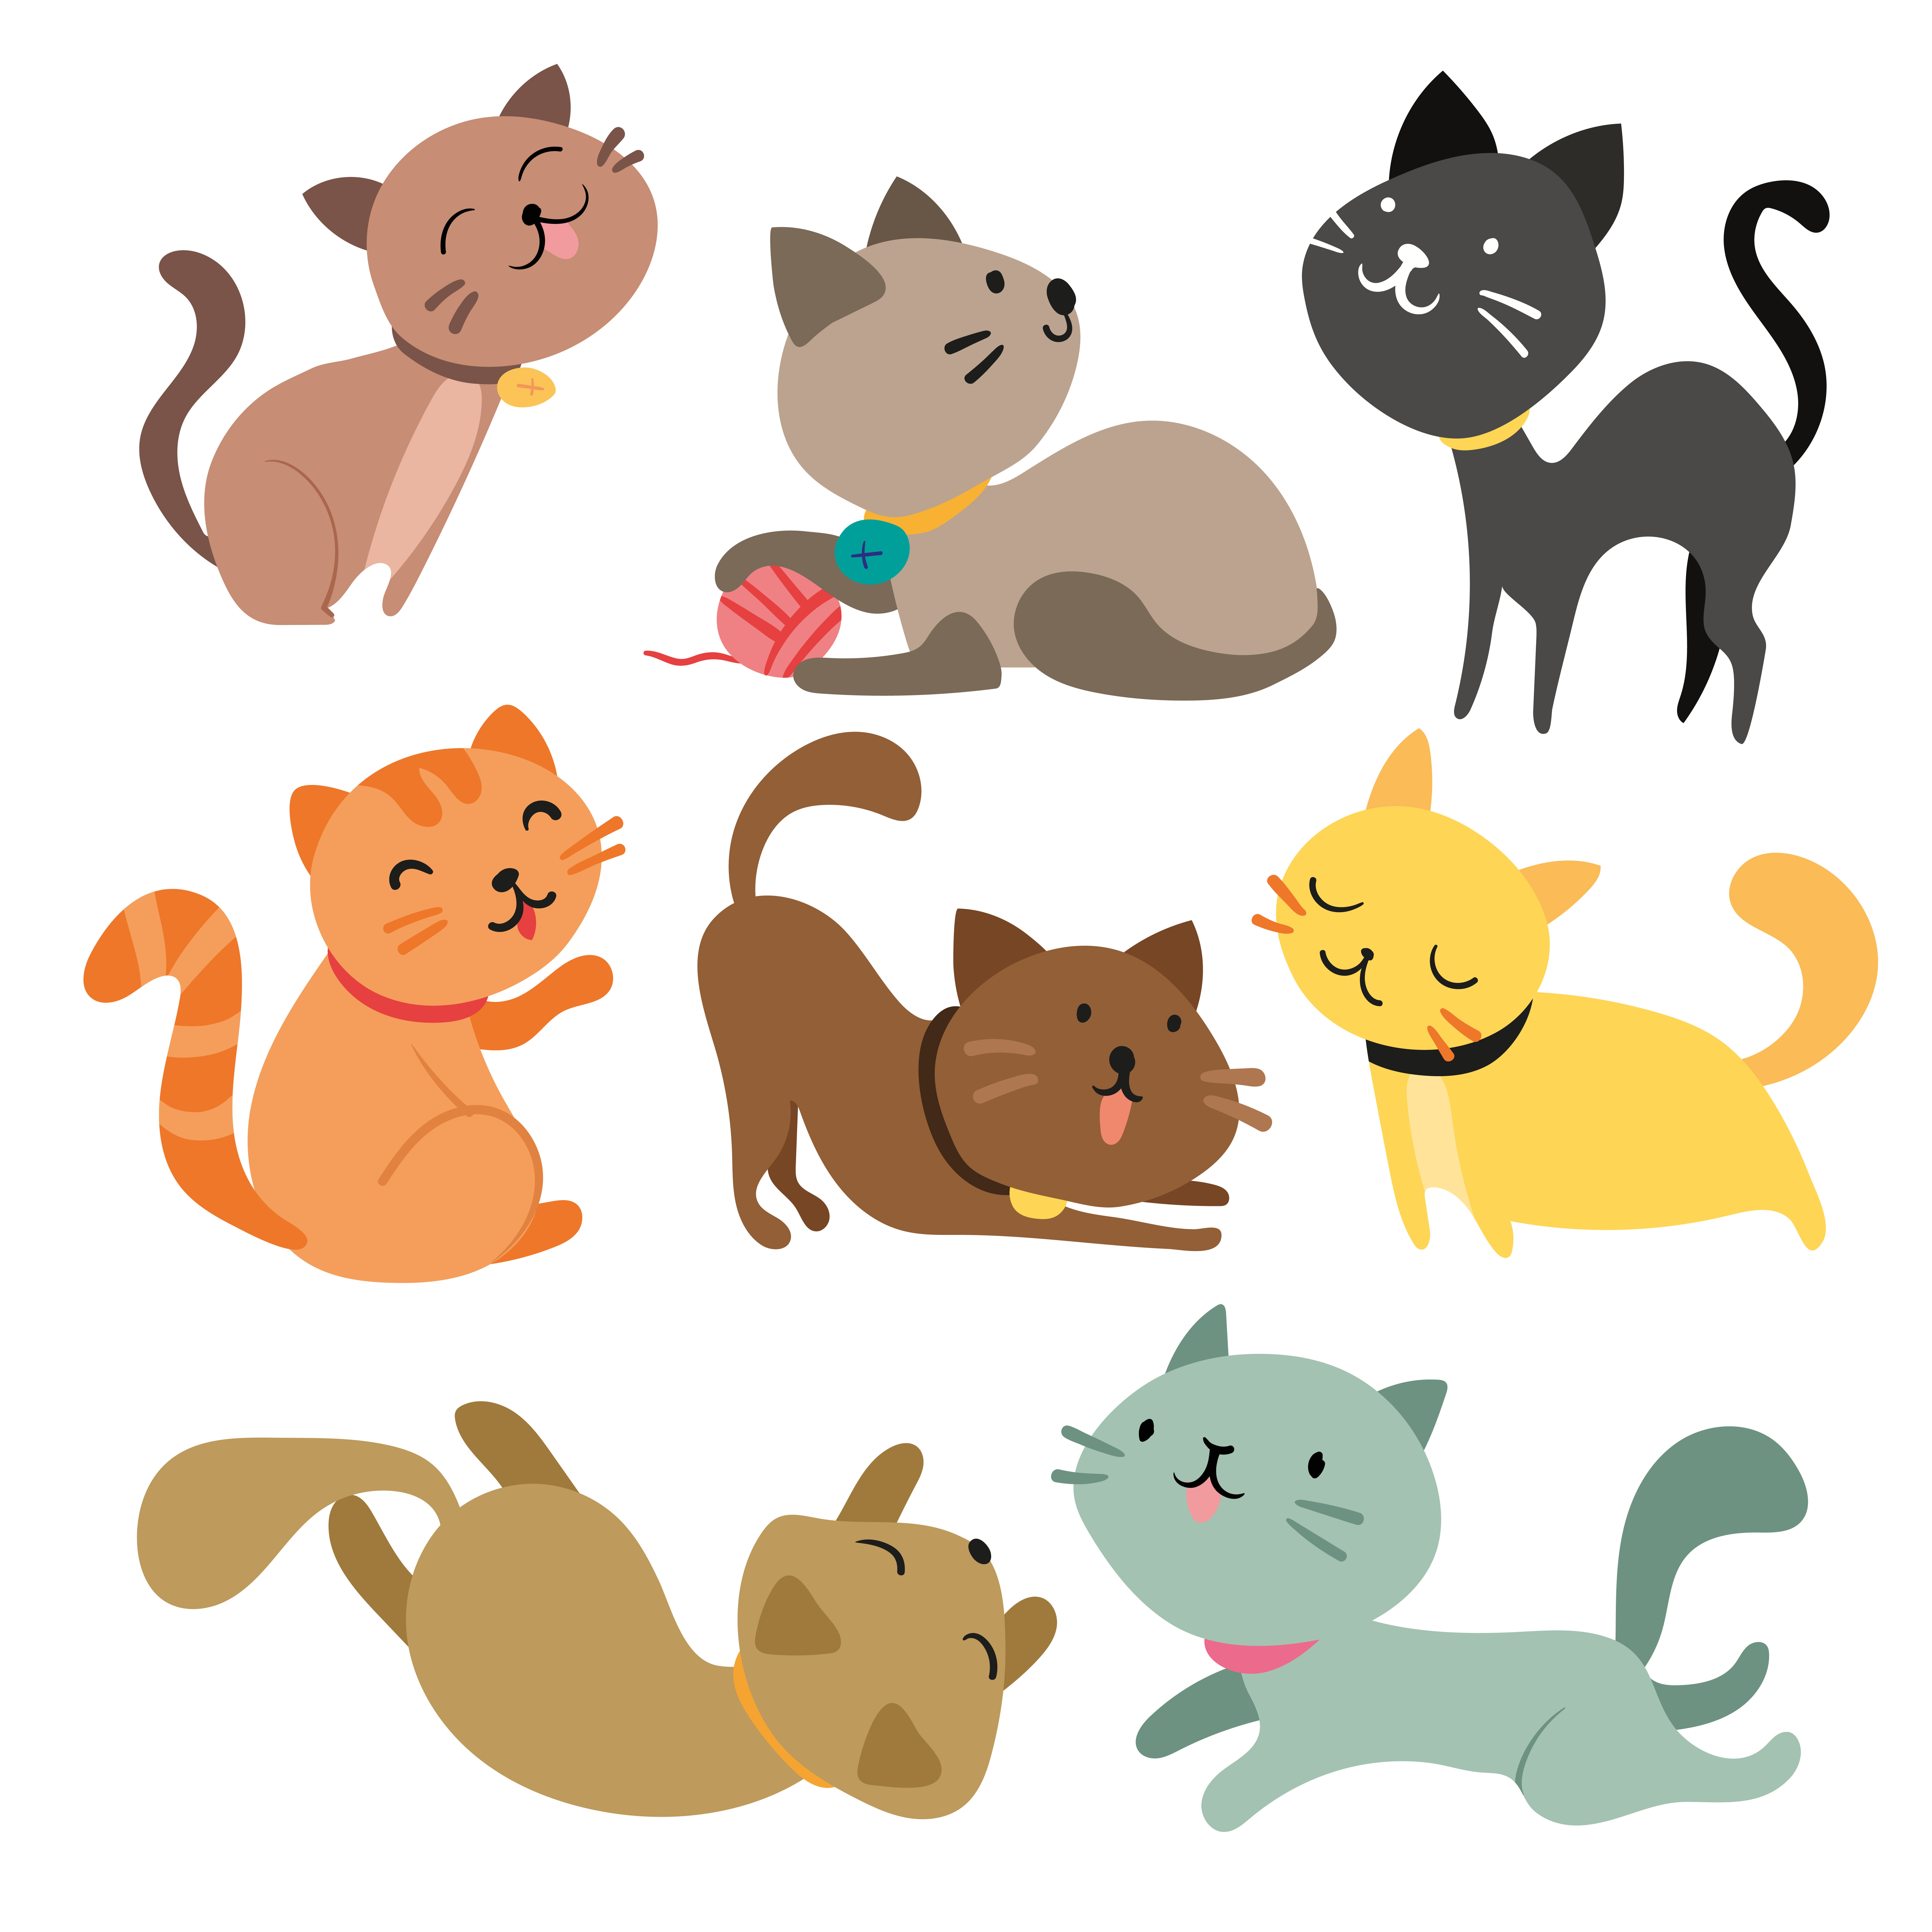 Cute Cat Free Vector Art 29 958 Free Downloads